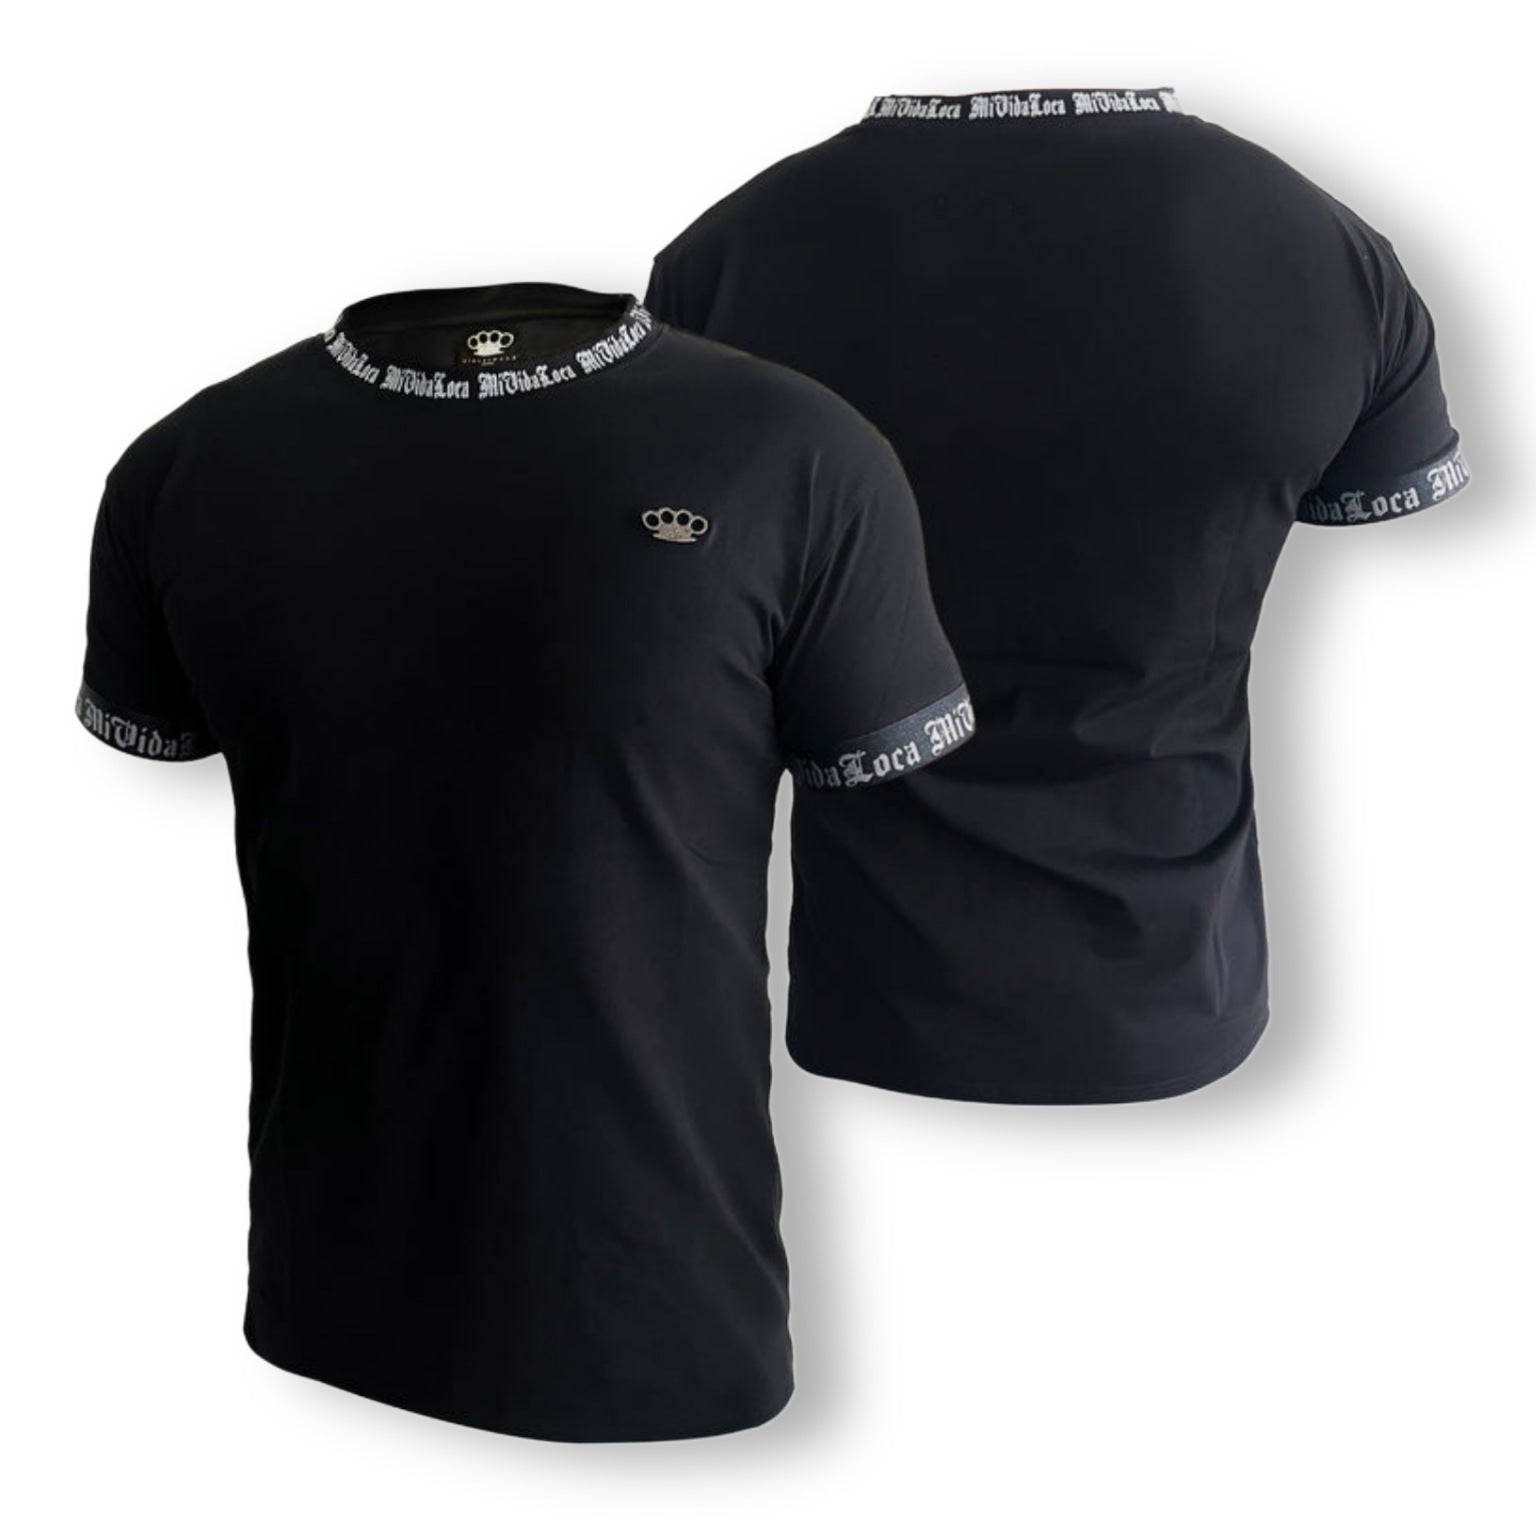 MVL "black line bandit" T-shirt - black/grey